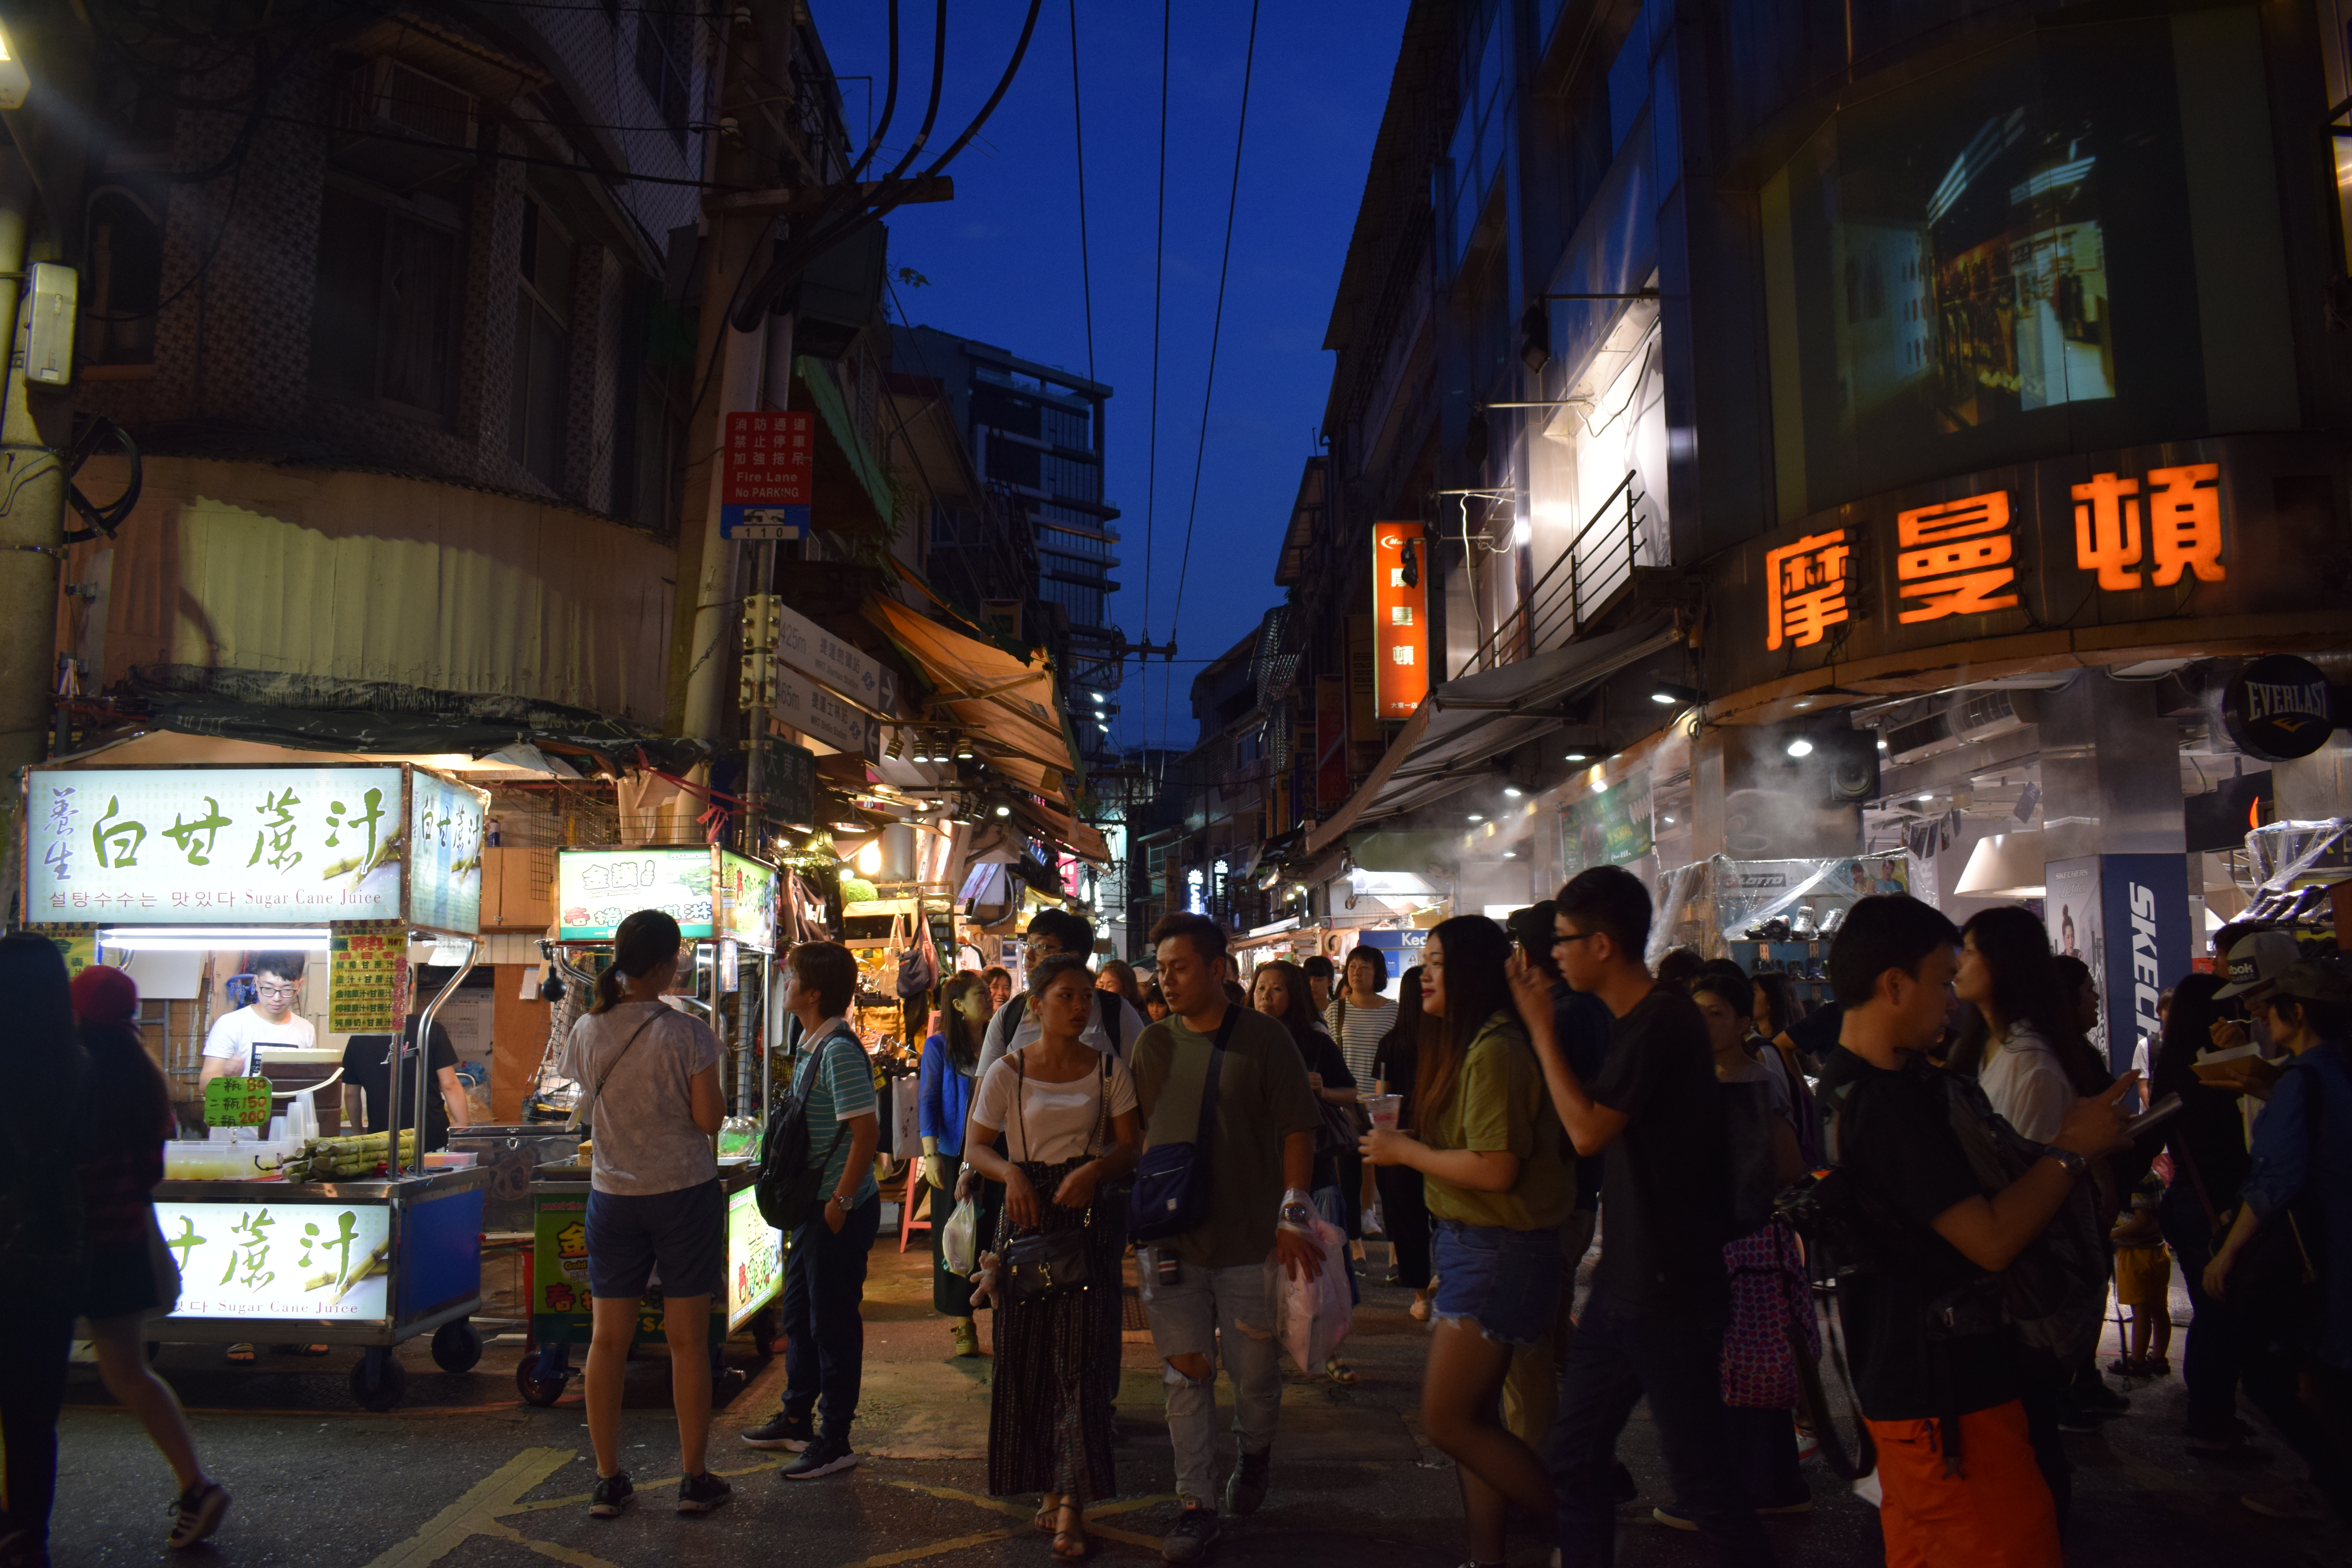 shilin night market